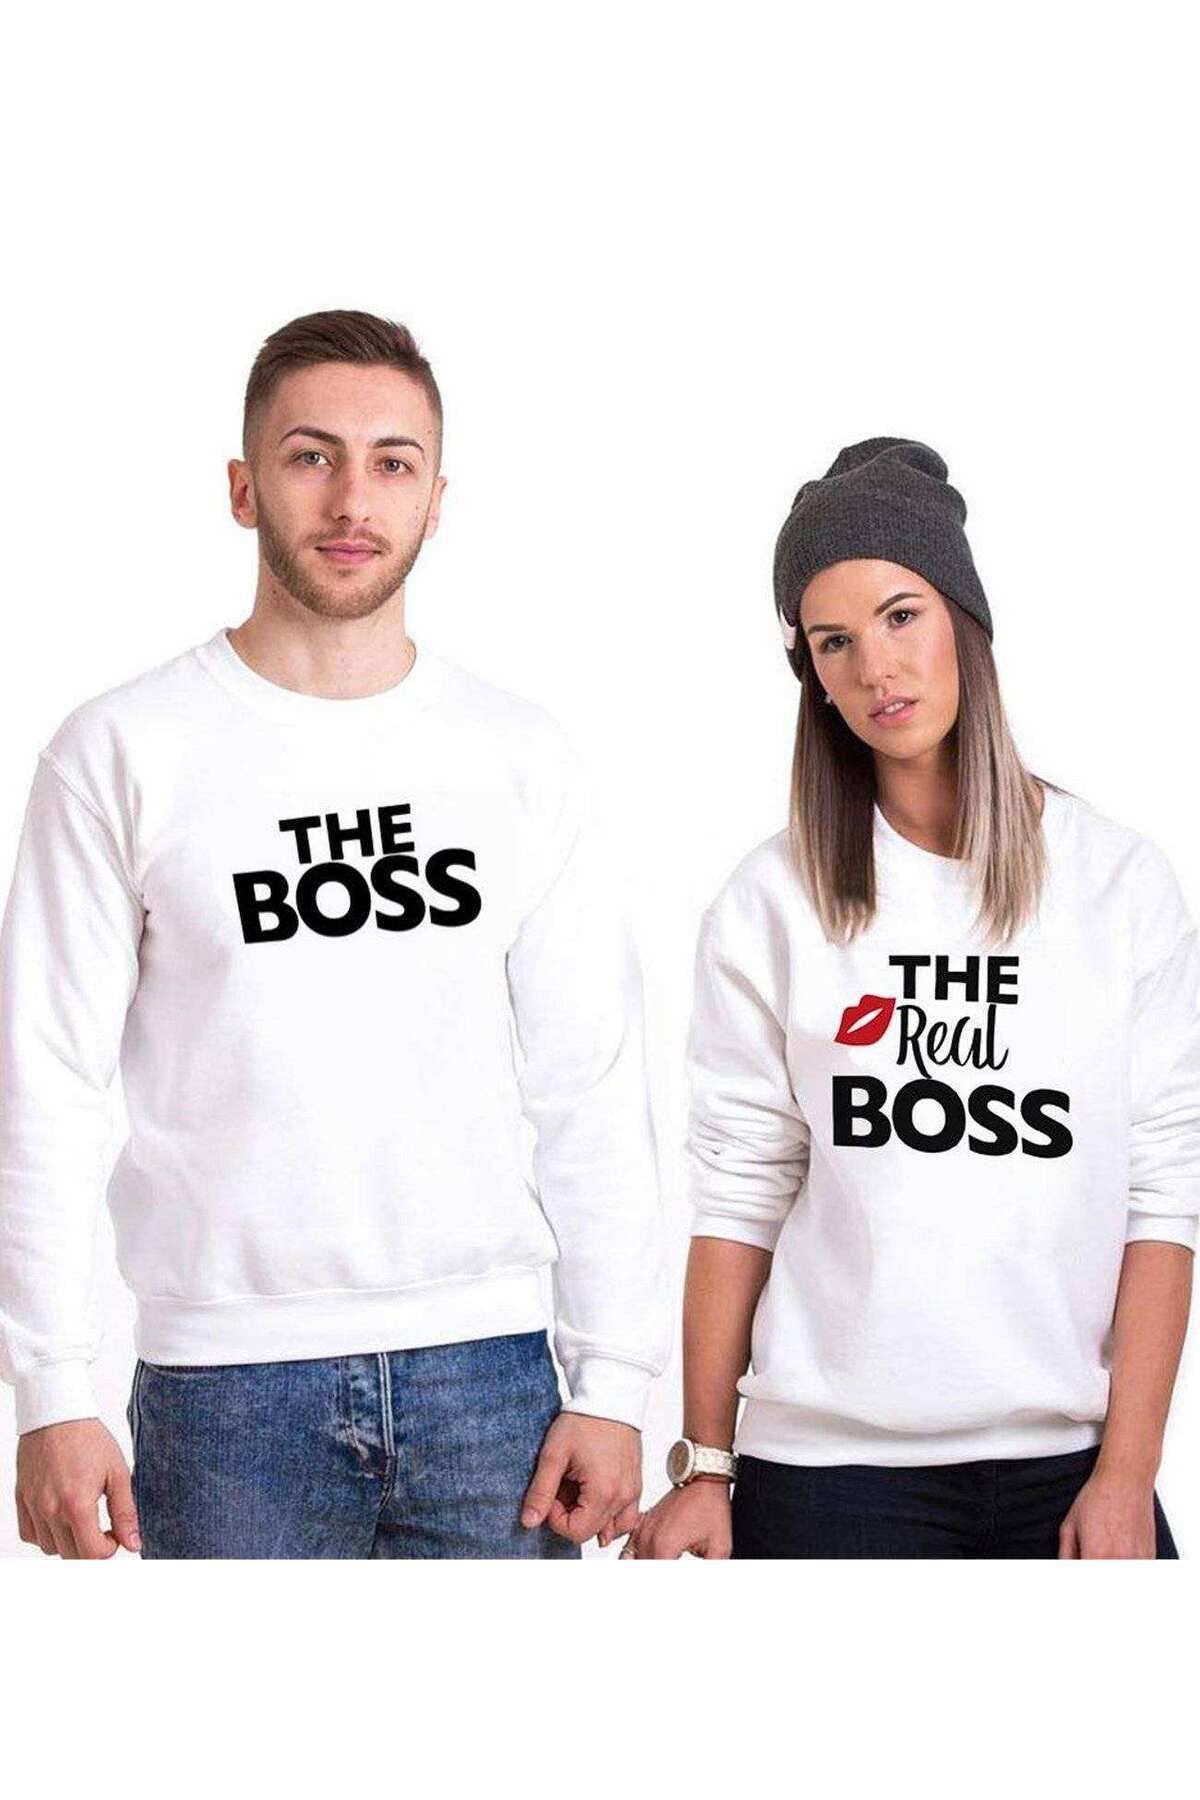 Tshirthane The Boss The Real Boss Sevgili Kombinleri Sweatshirt Çift Kombini